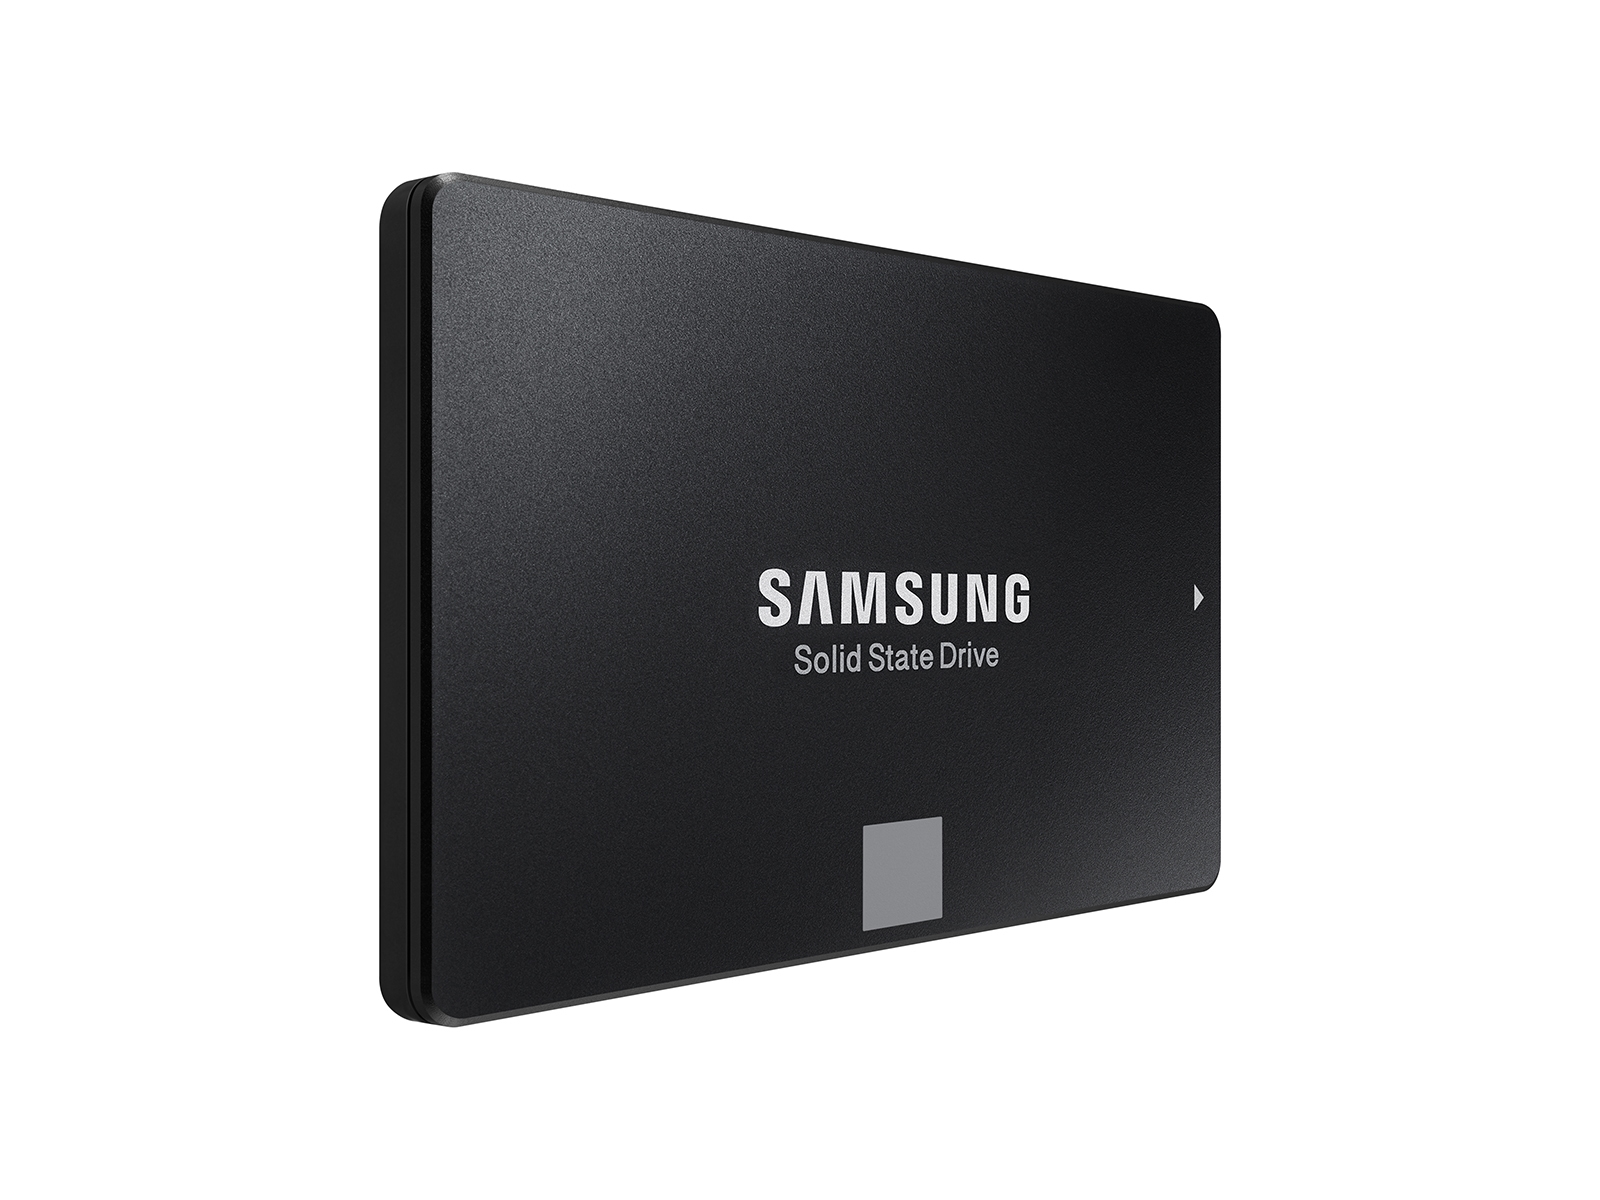 SSD 860 EVO SATA III 250GB Memory & Storage MZ-76E250B/AM | Samsung US